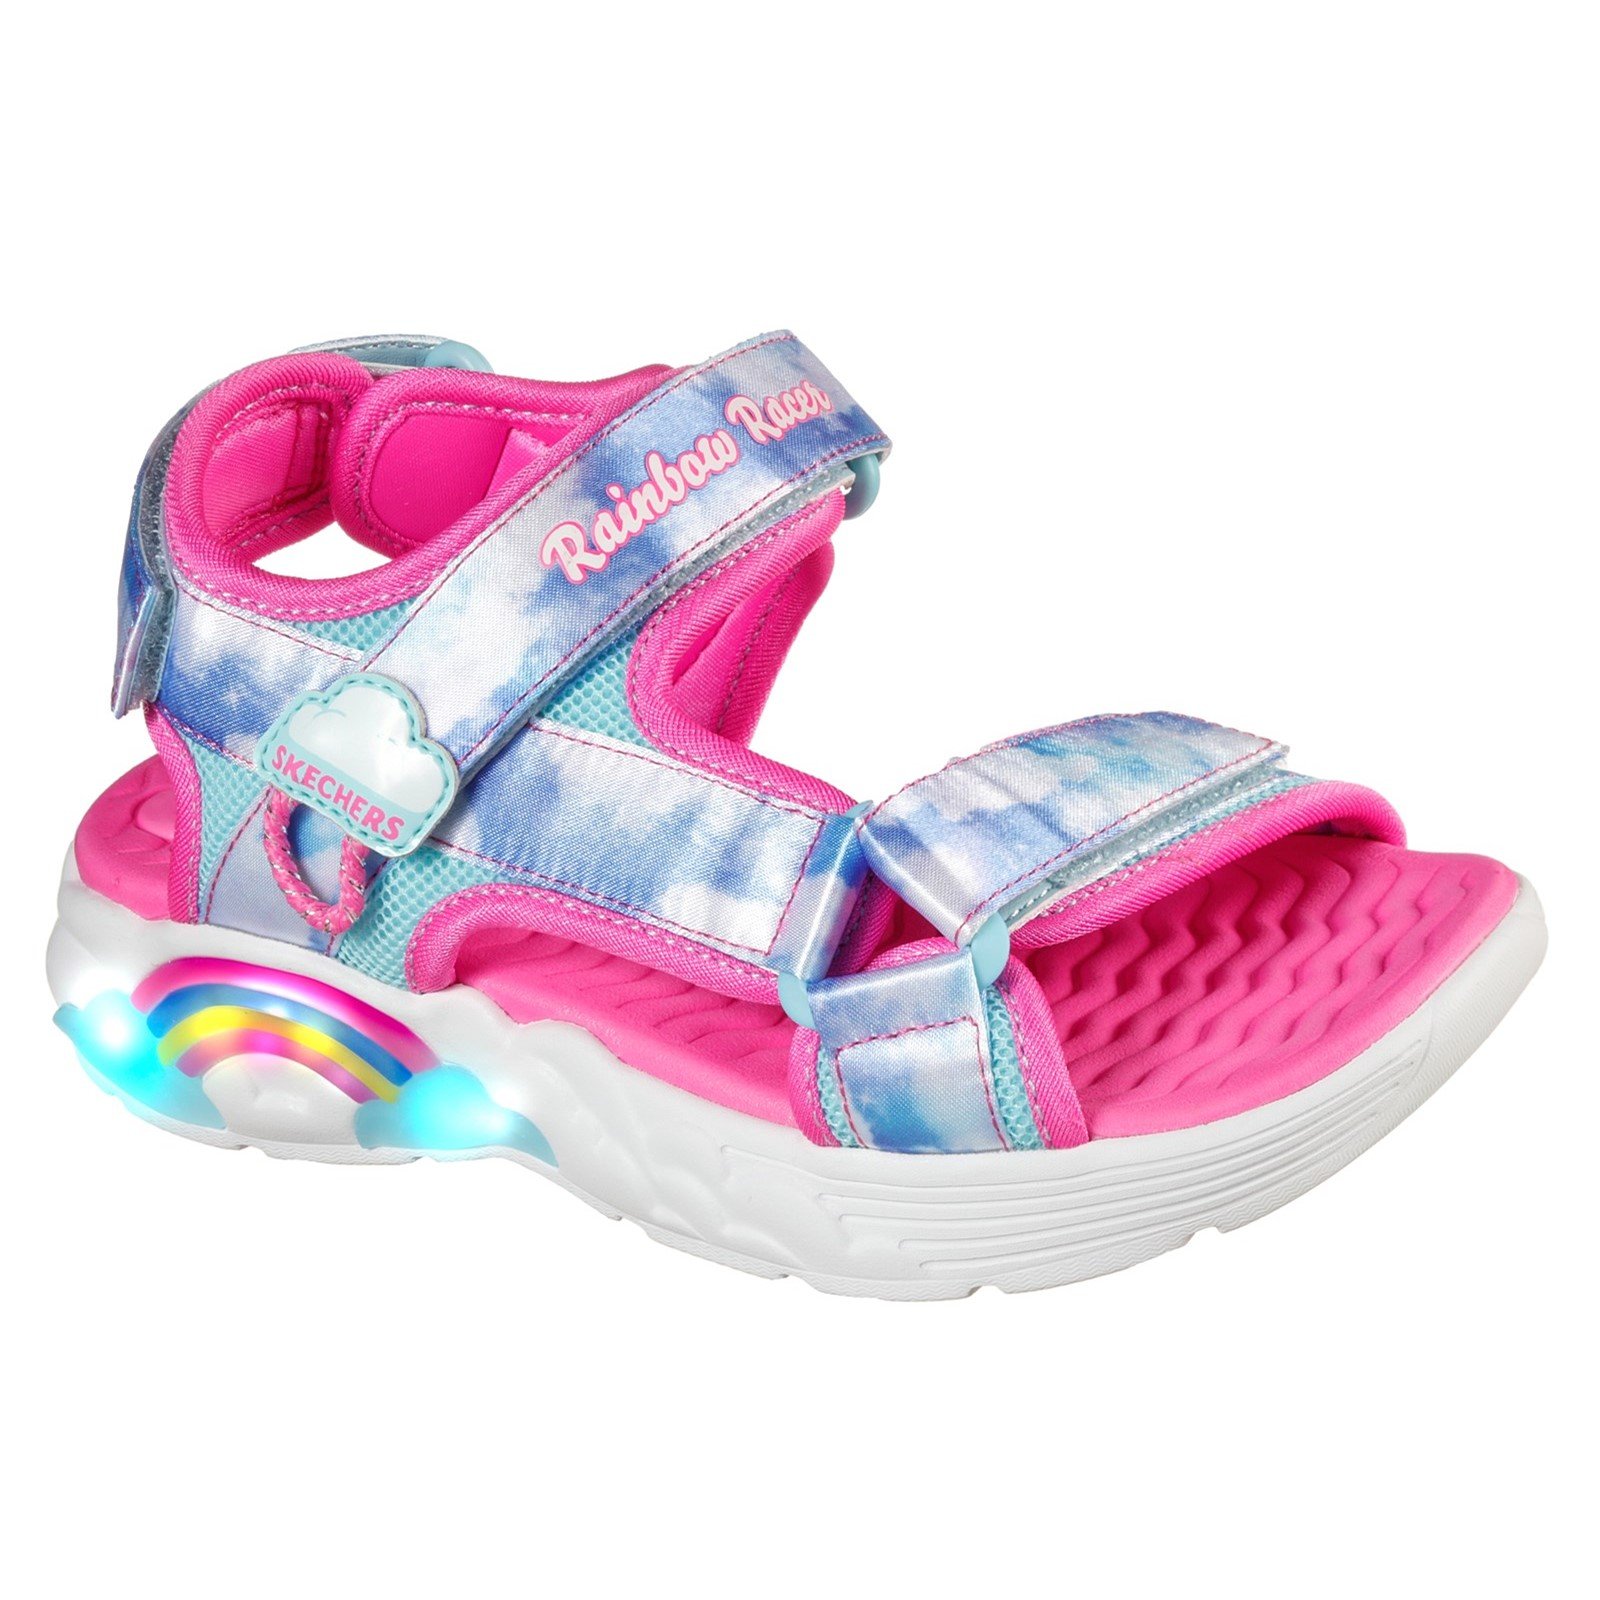 Skechers Unisex Rainbow Racer Summer Sky Beach Sandals Multicolor 32096 - Pink/Blue Textile 2